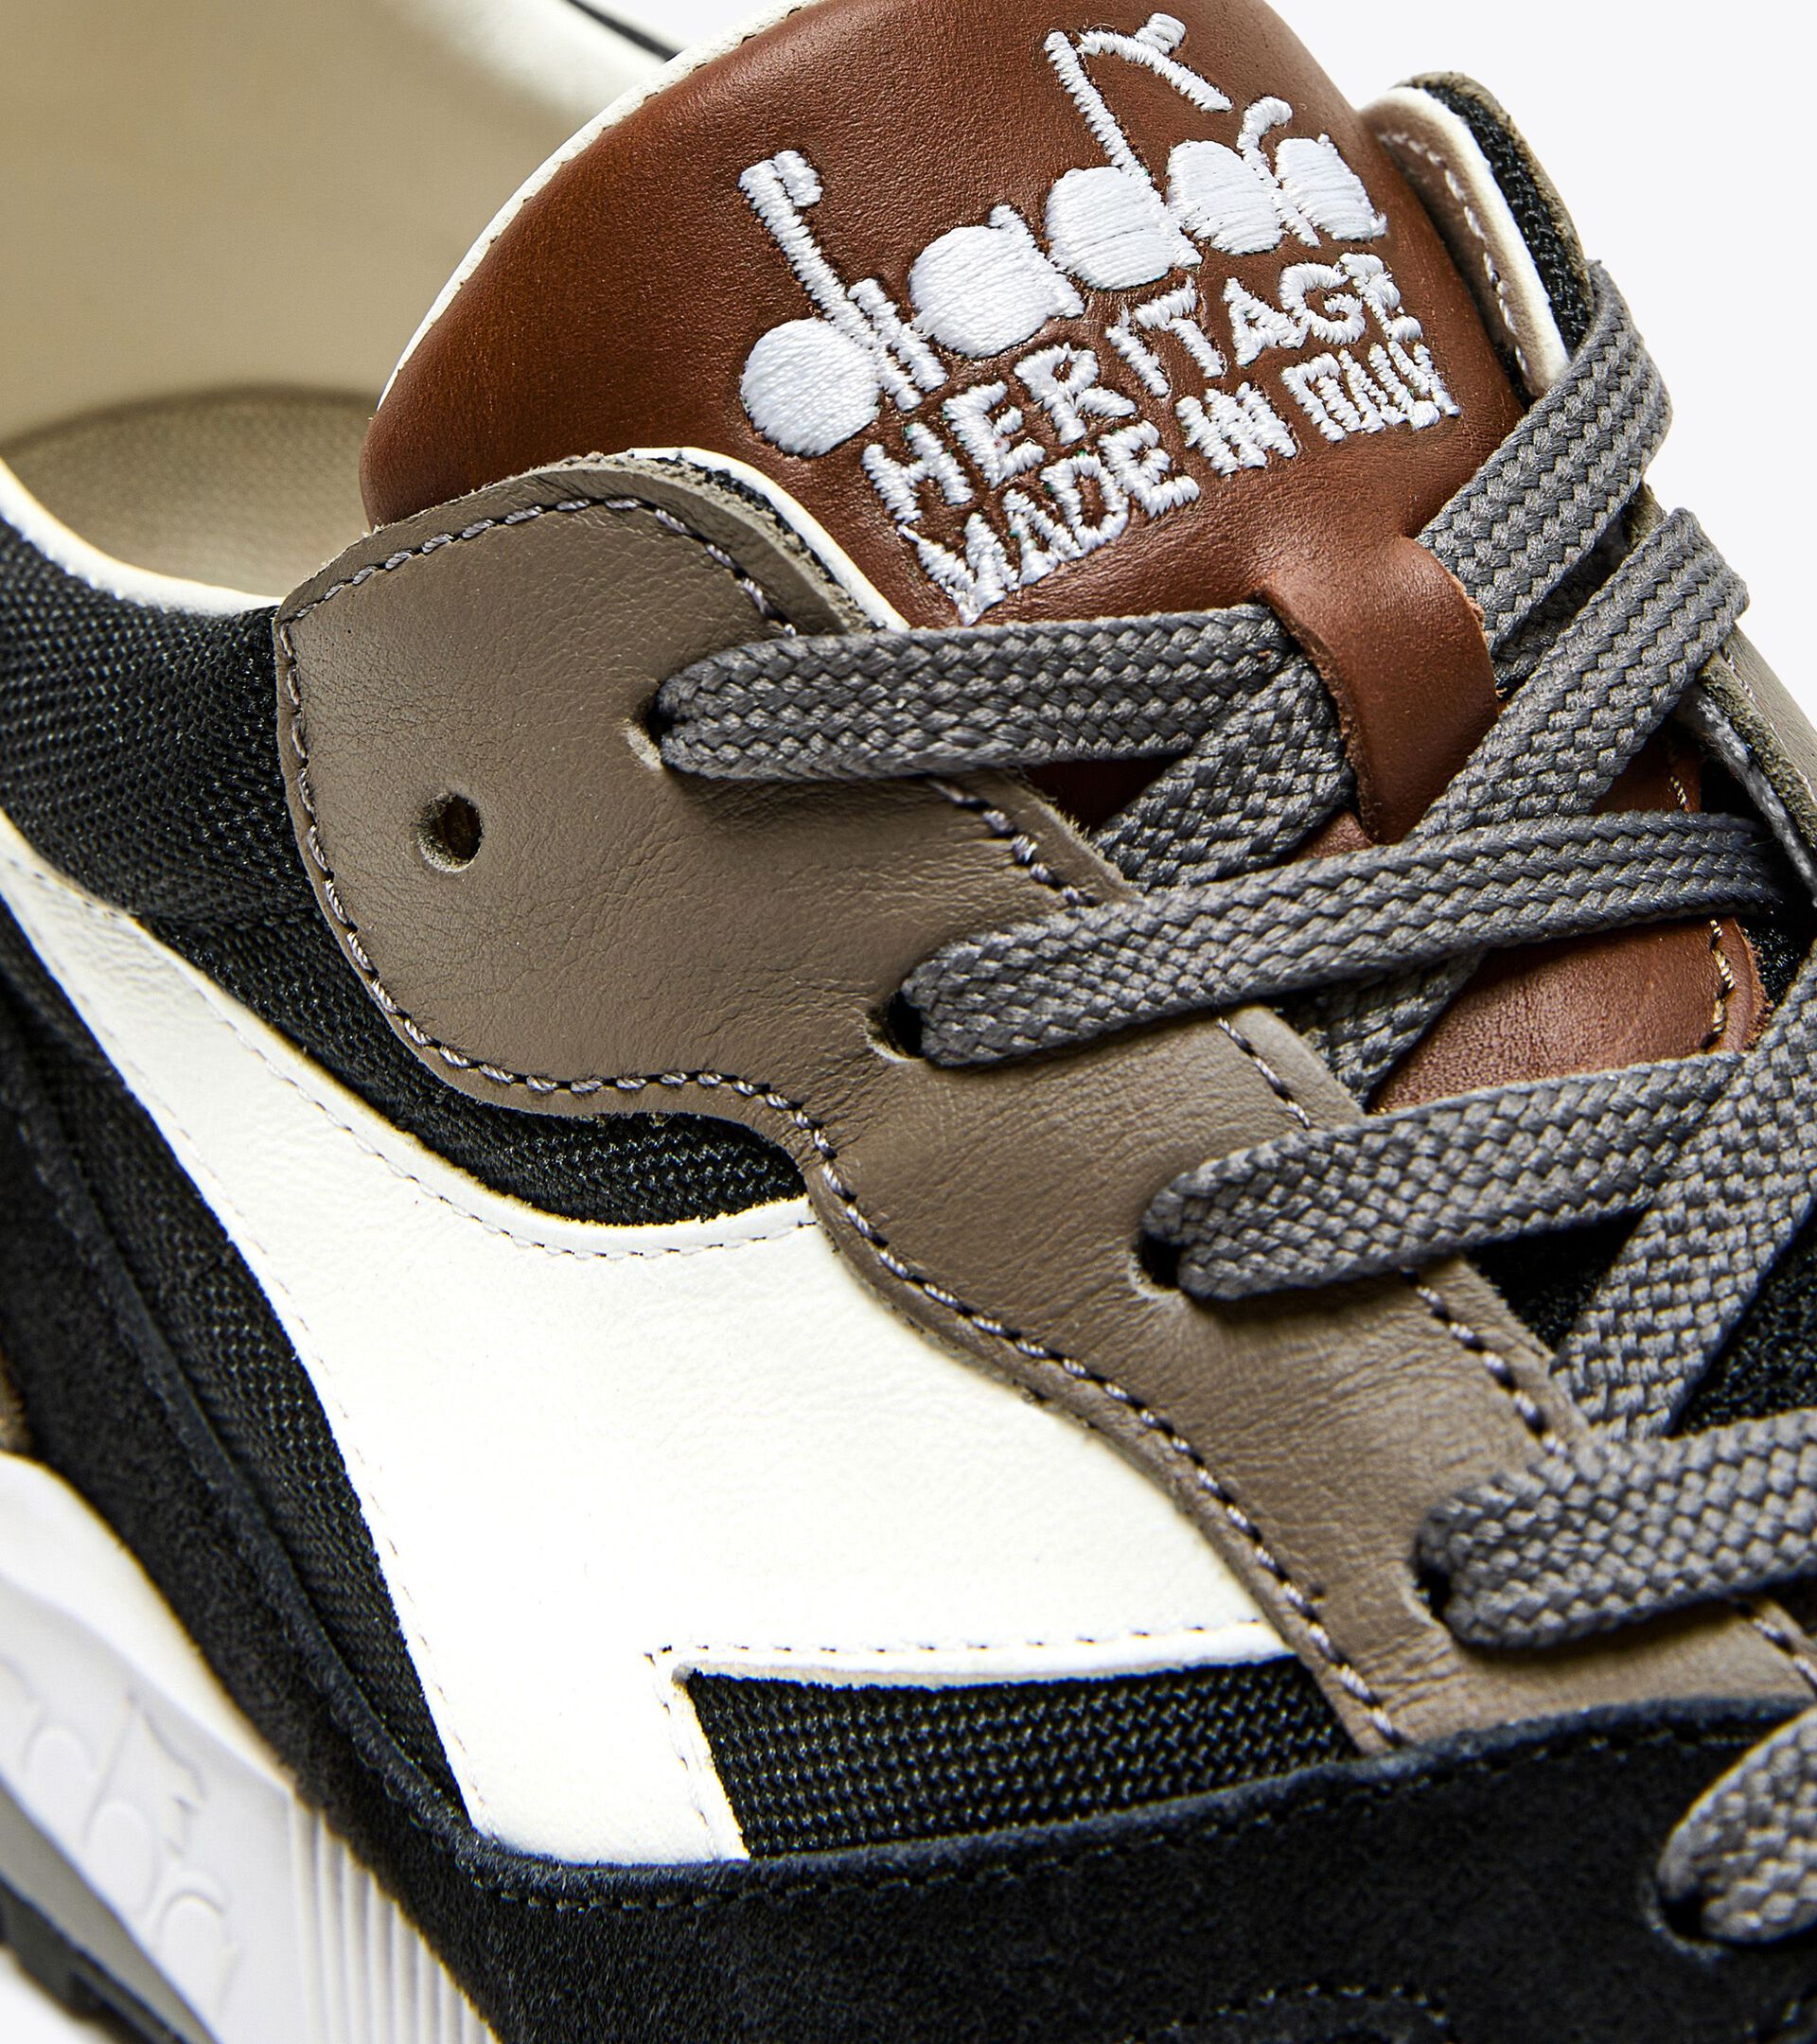 Heritage Shoe - Made in Italy - Men N9000 2030 ITALIA BLACK - Diadora